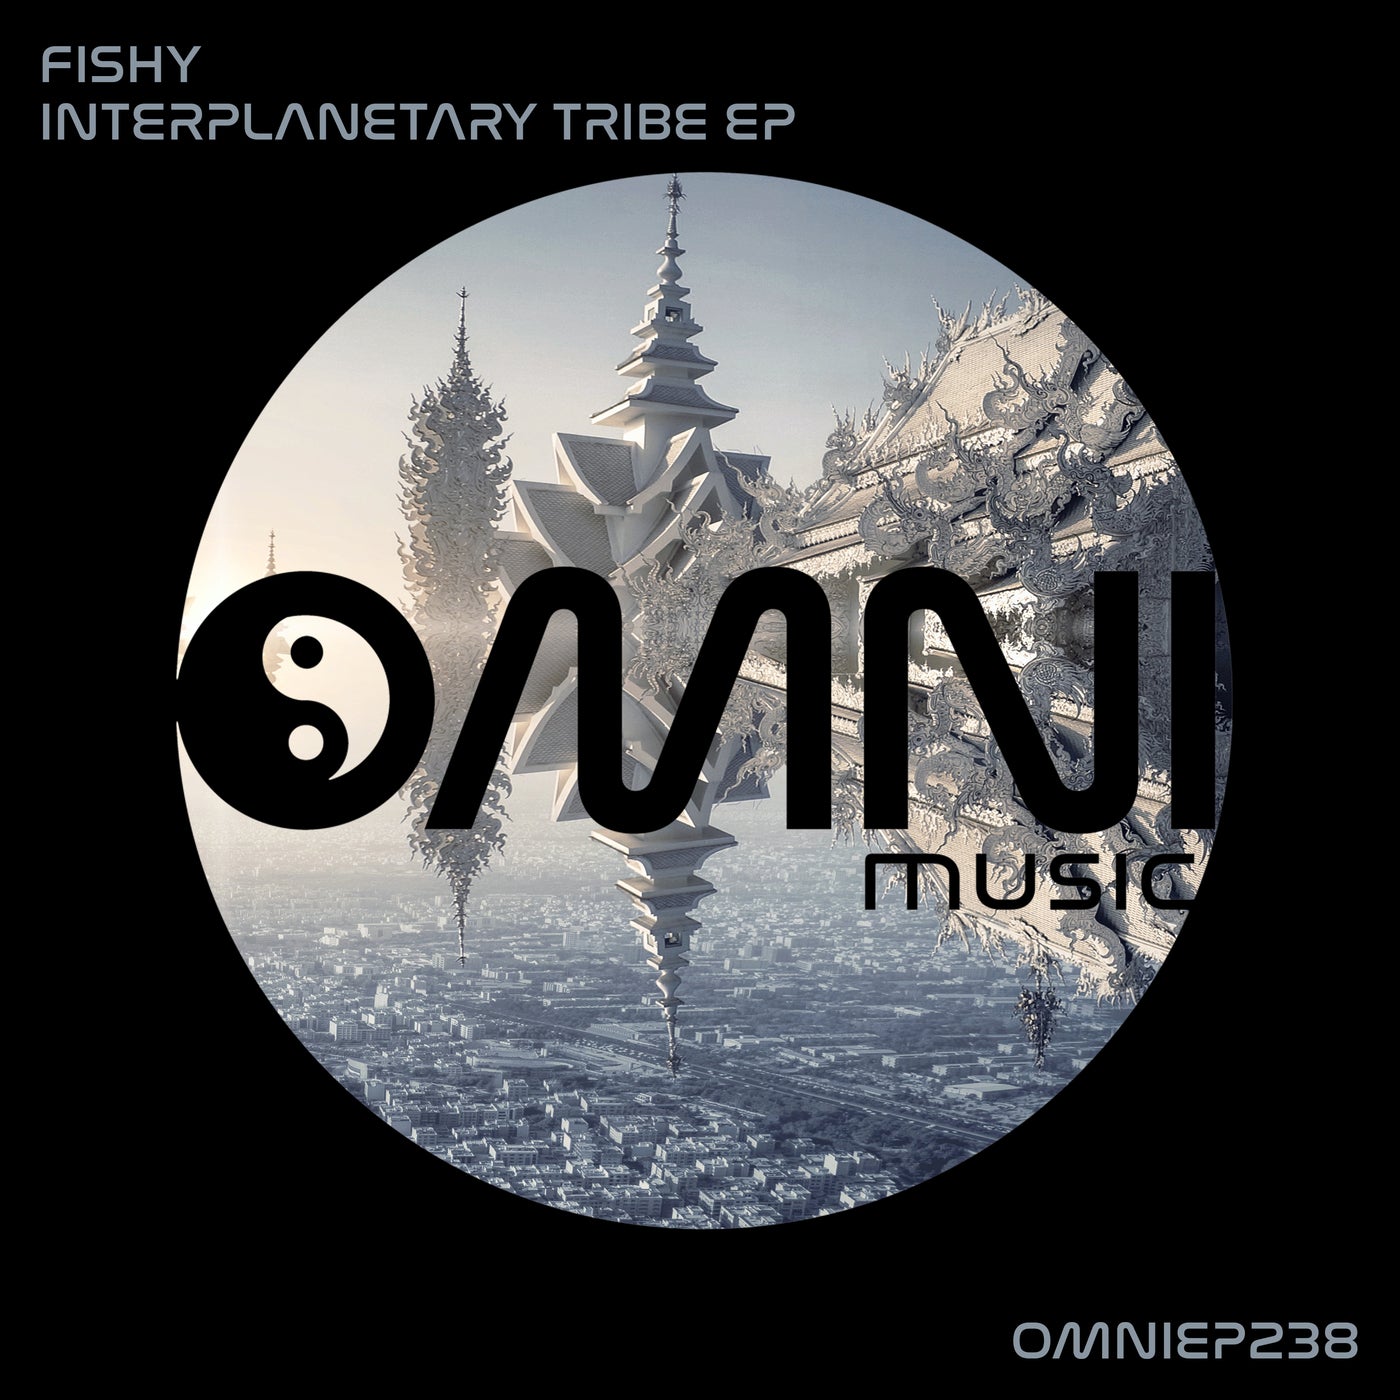 Interplanetary Tribe EP